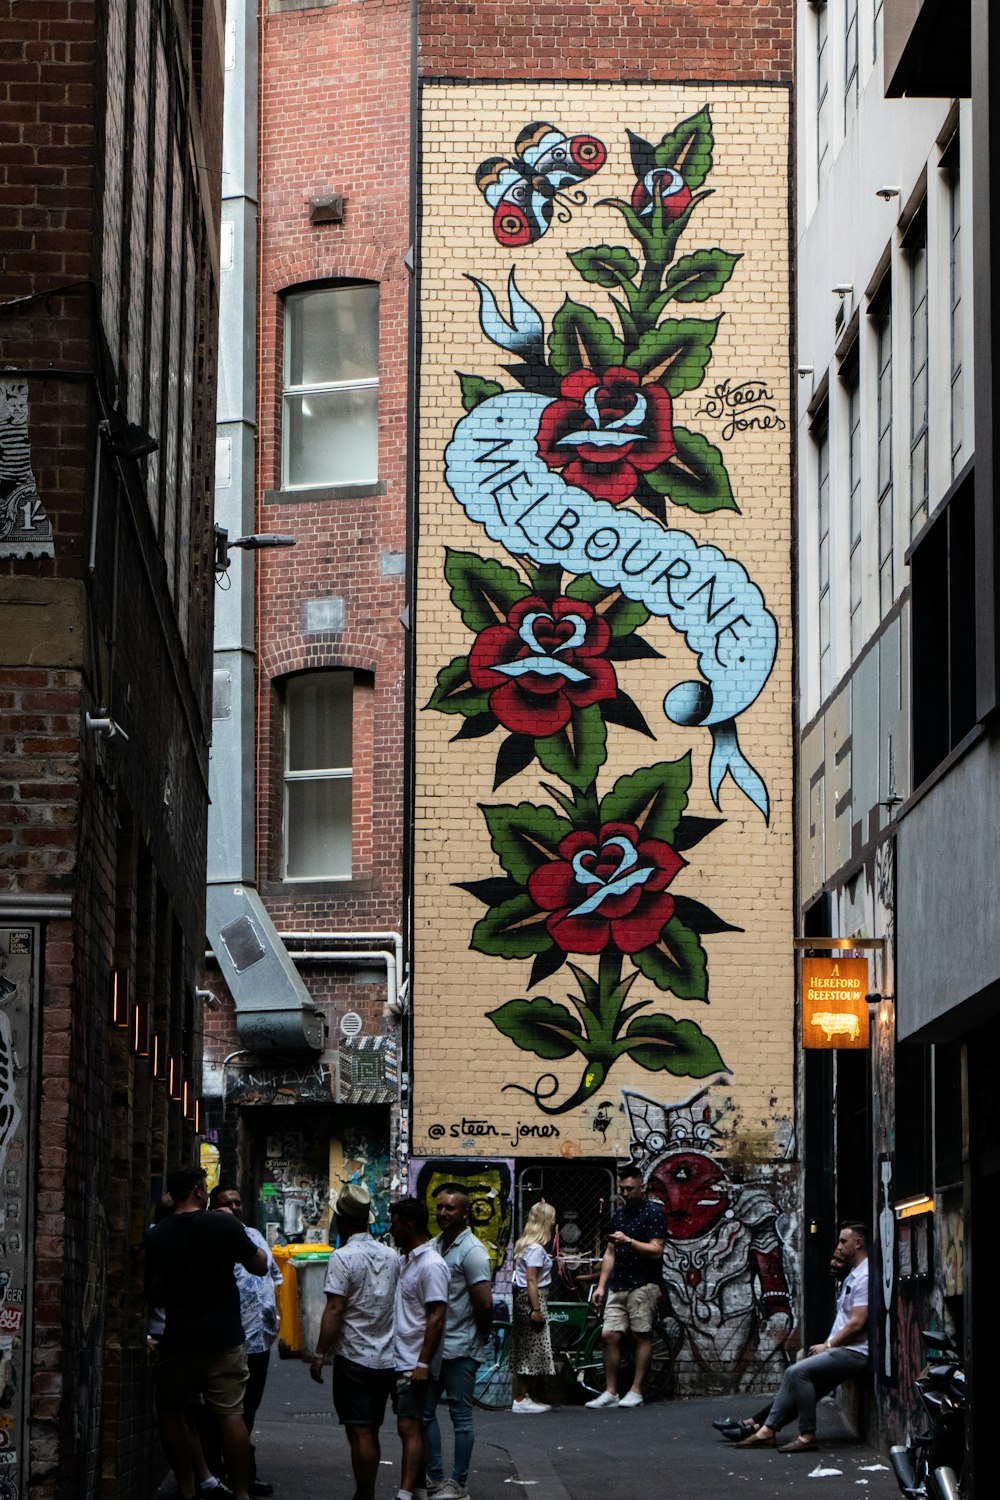 Melbourne red rose graffiti during daytime